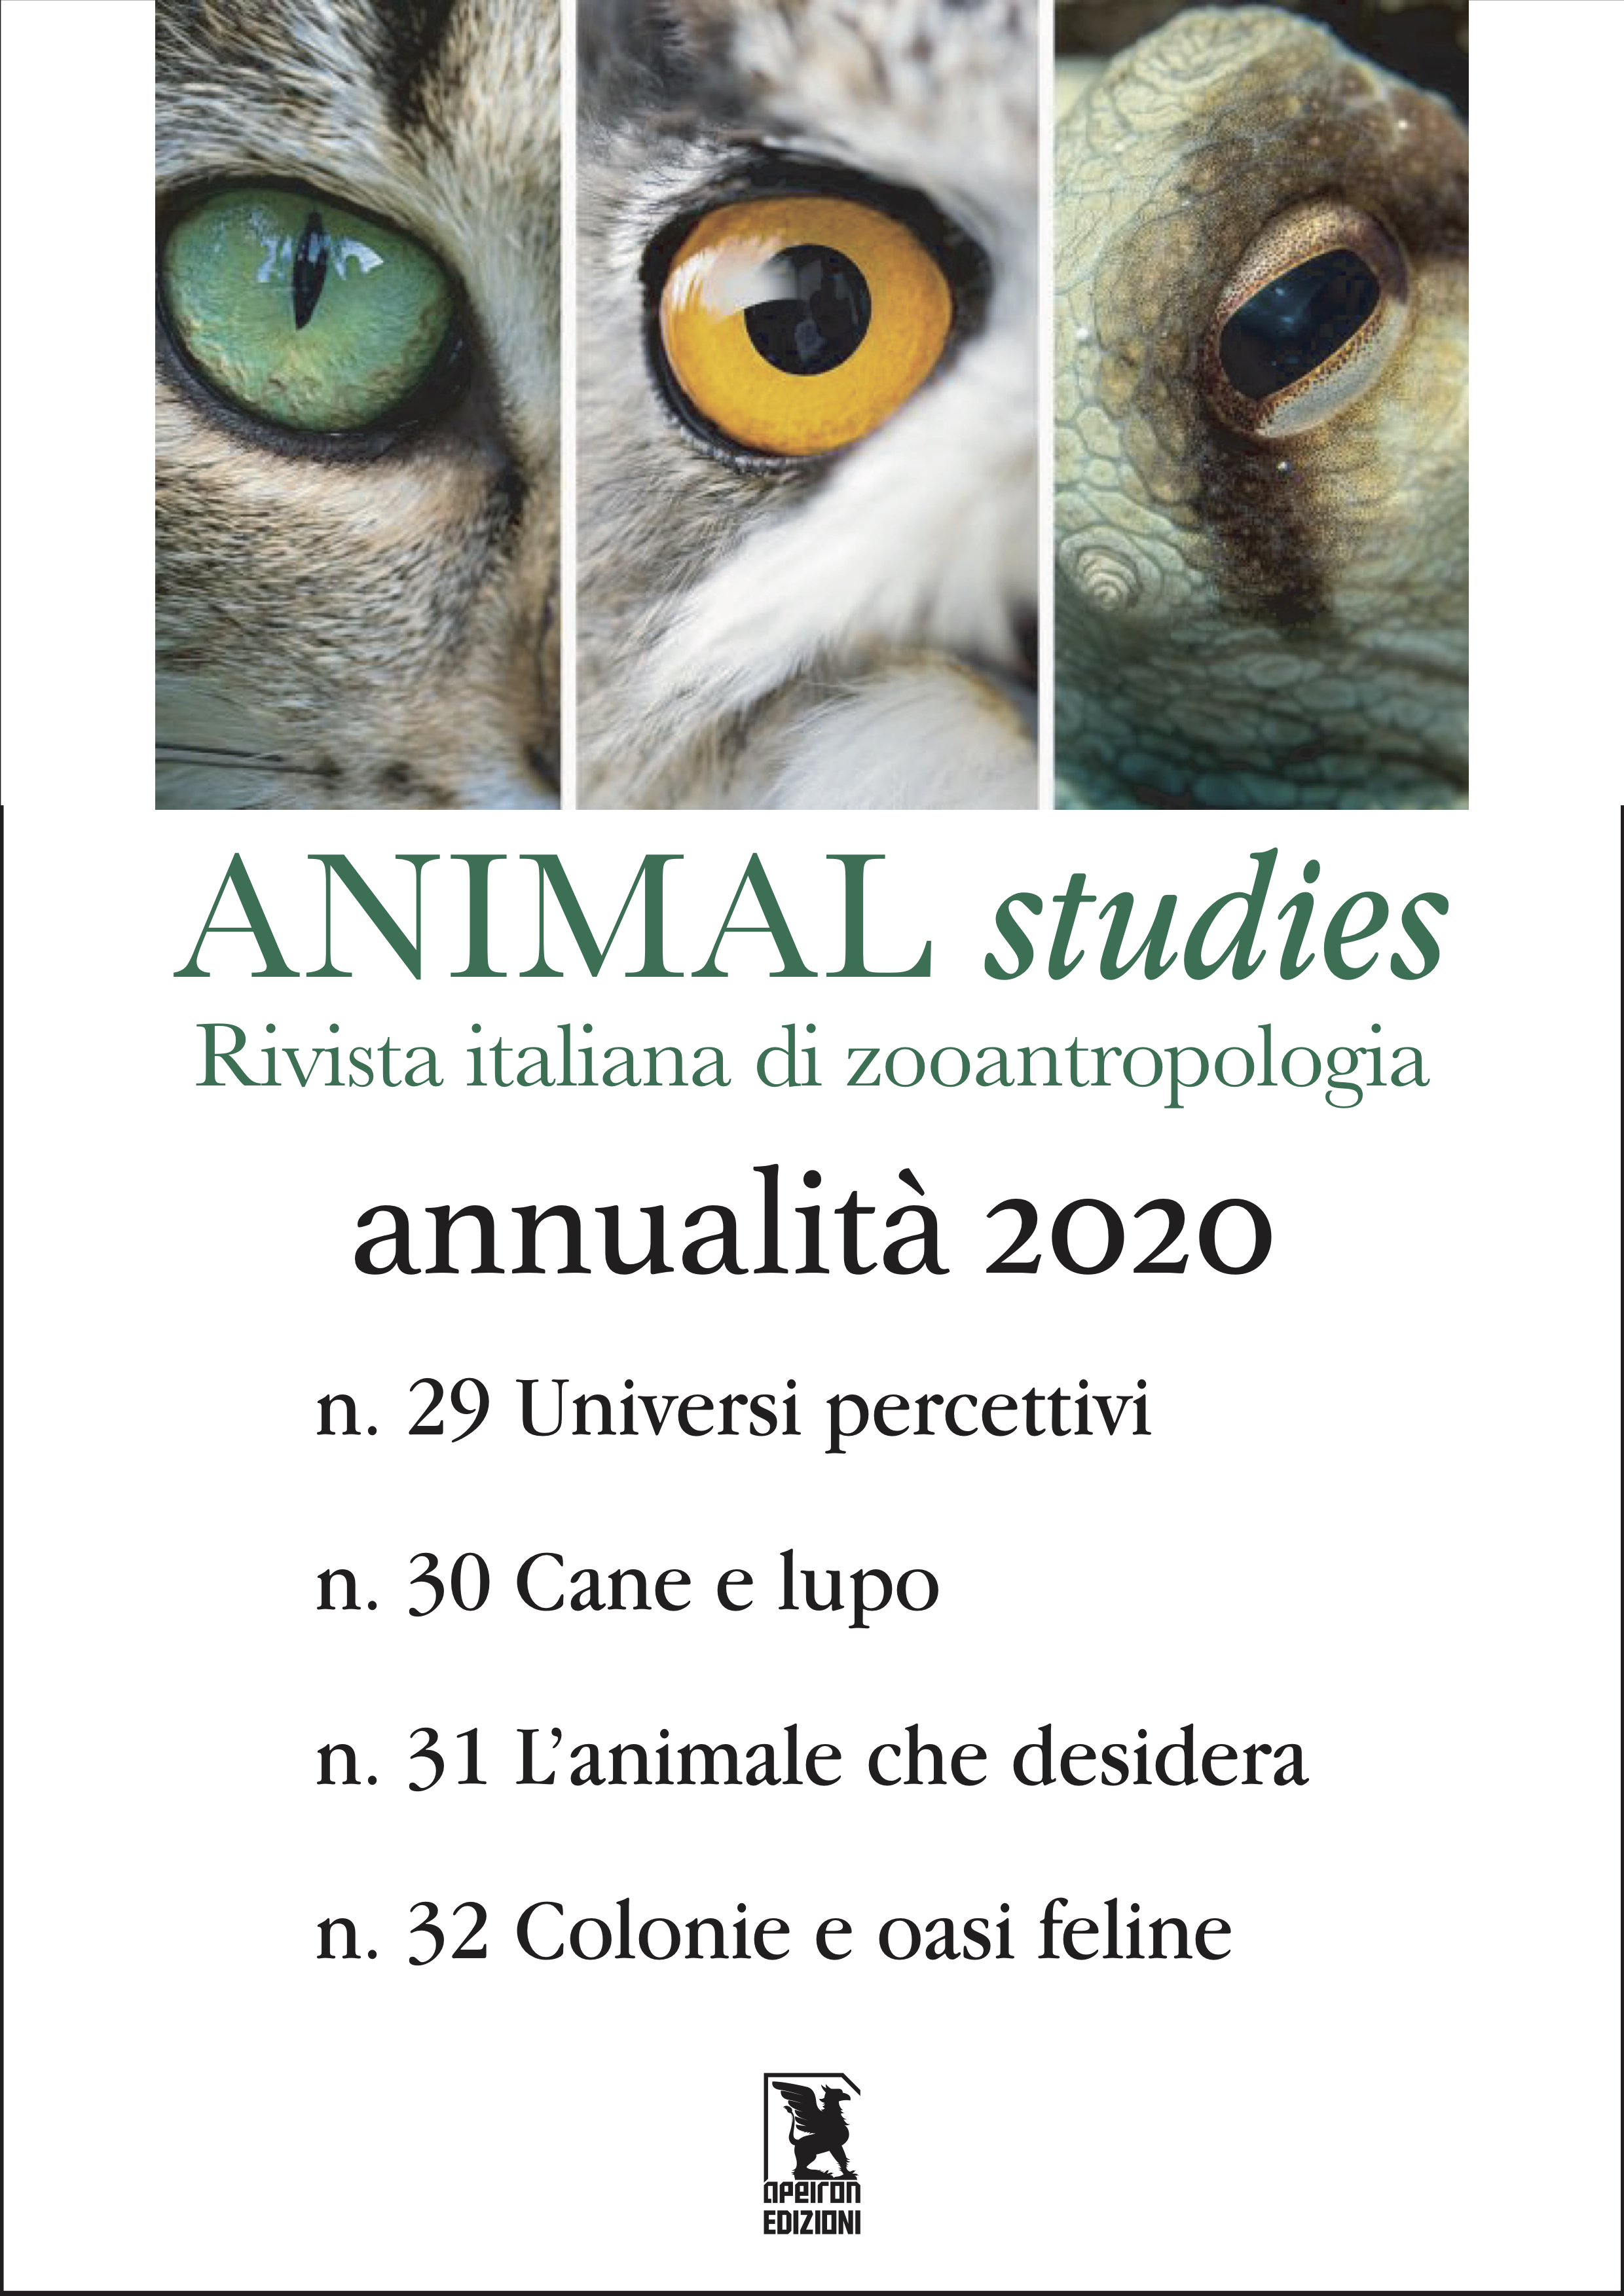 Copertina della rivista Animal studies